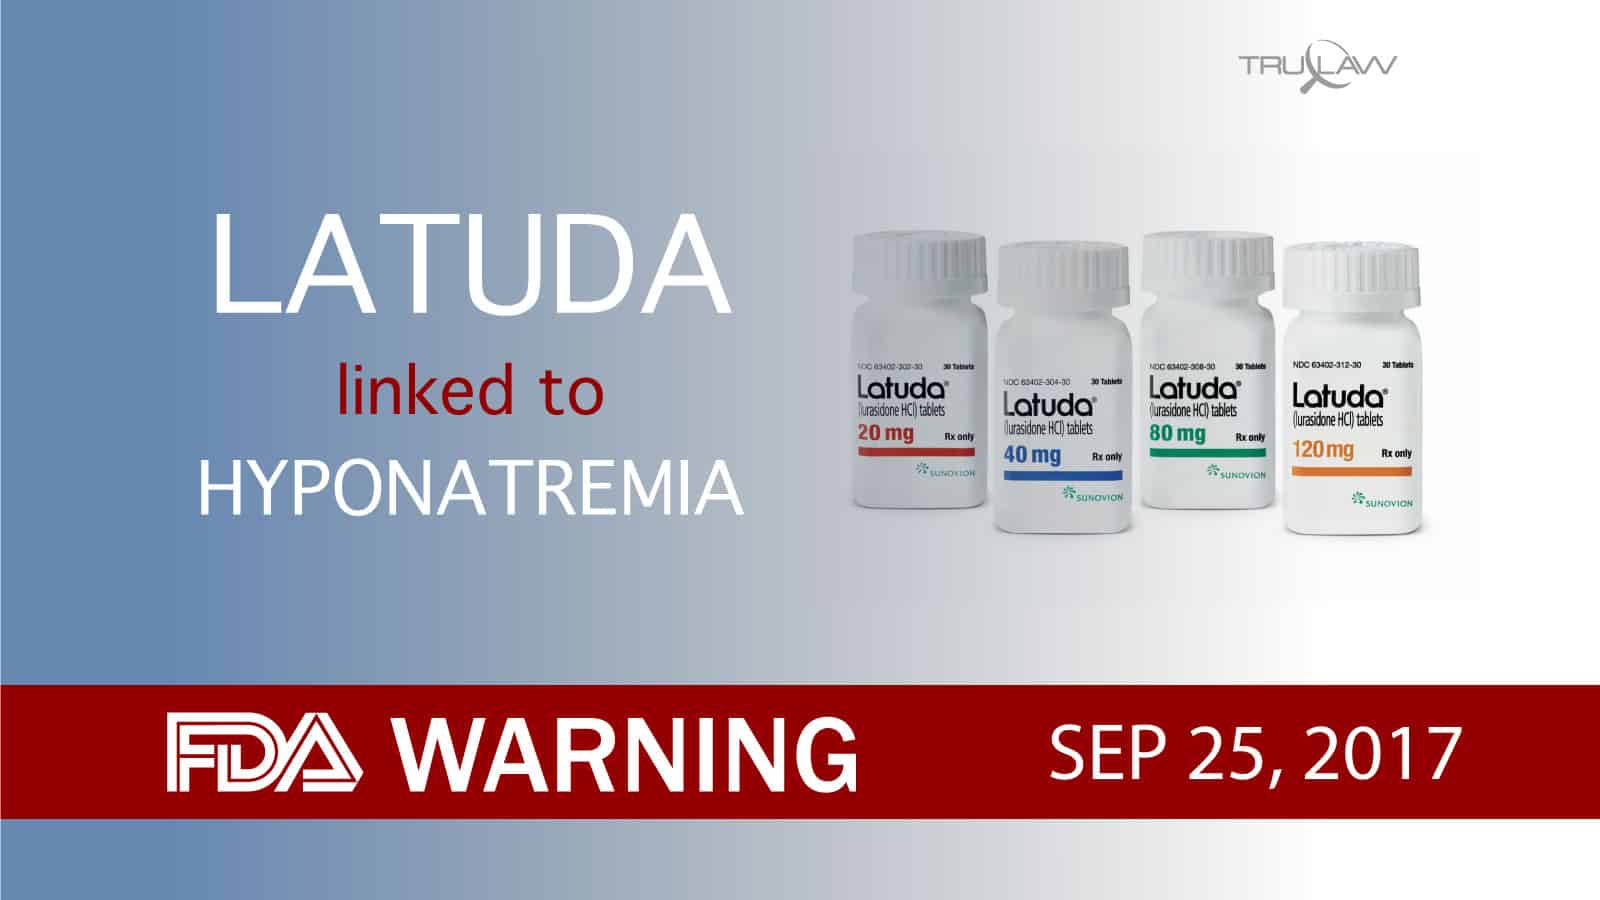 FDA Warns Latuda Use Could Lead To Hyponatremia